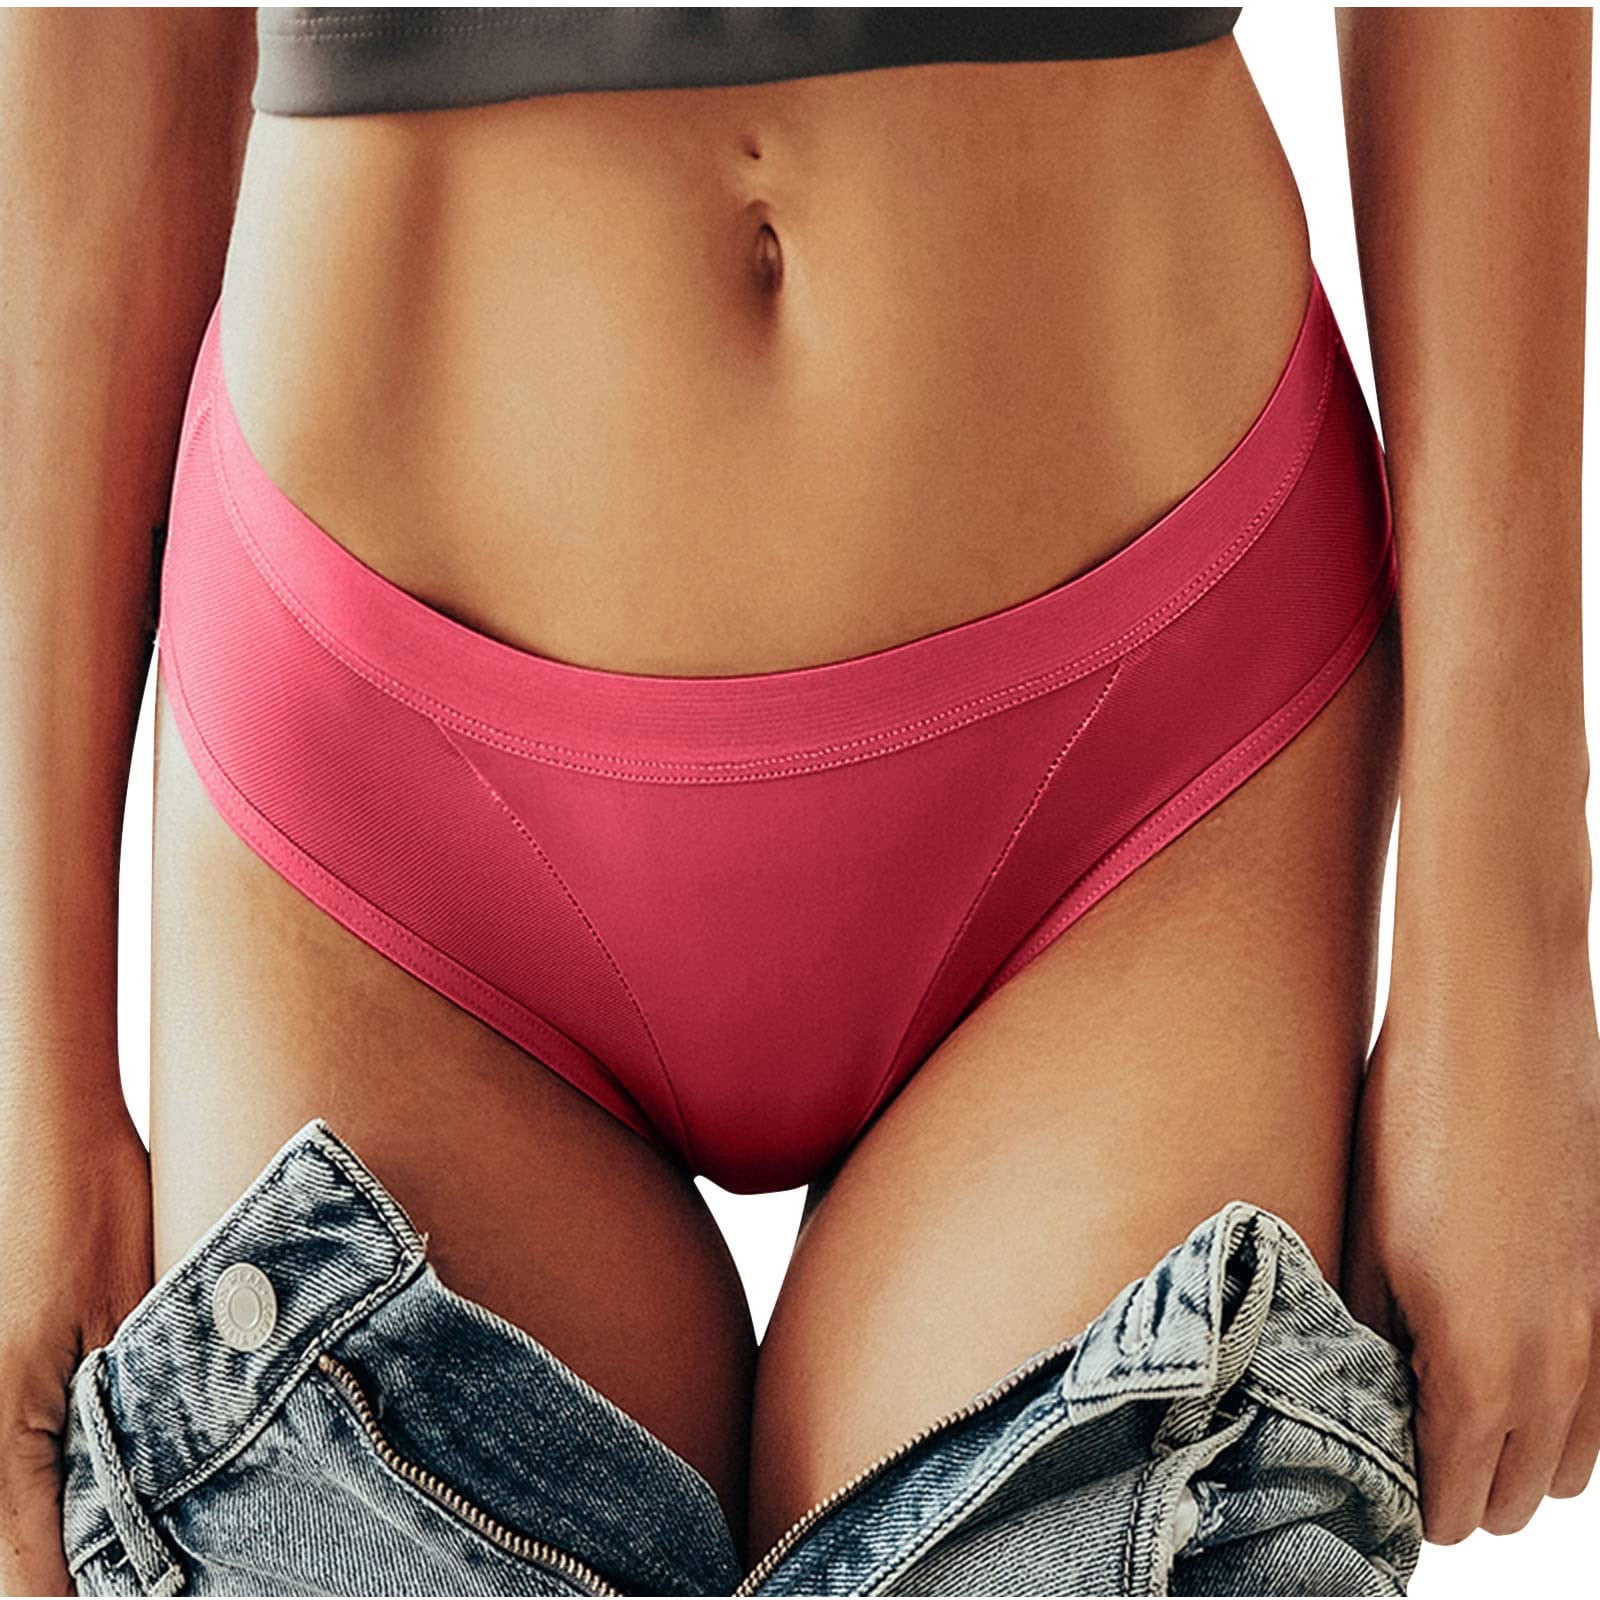 Lopecy-Sta Women's Solid Underwear Cotton Stretch Sexy Panties Lingerie  Women Briefs Savings Clearance Womens Underwear Period Underwear for Women  Red 